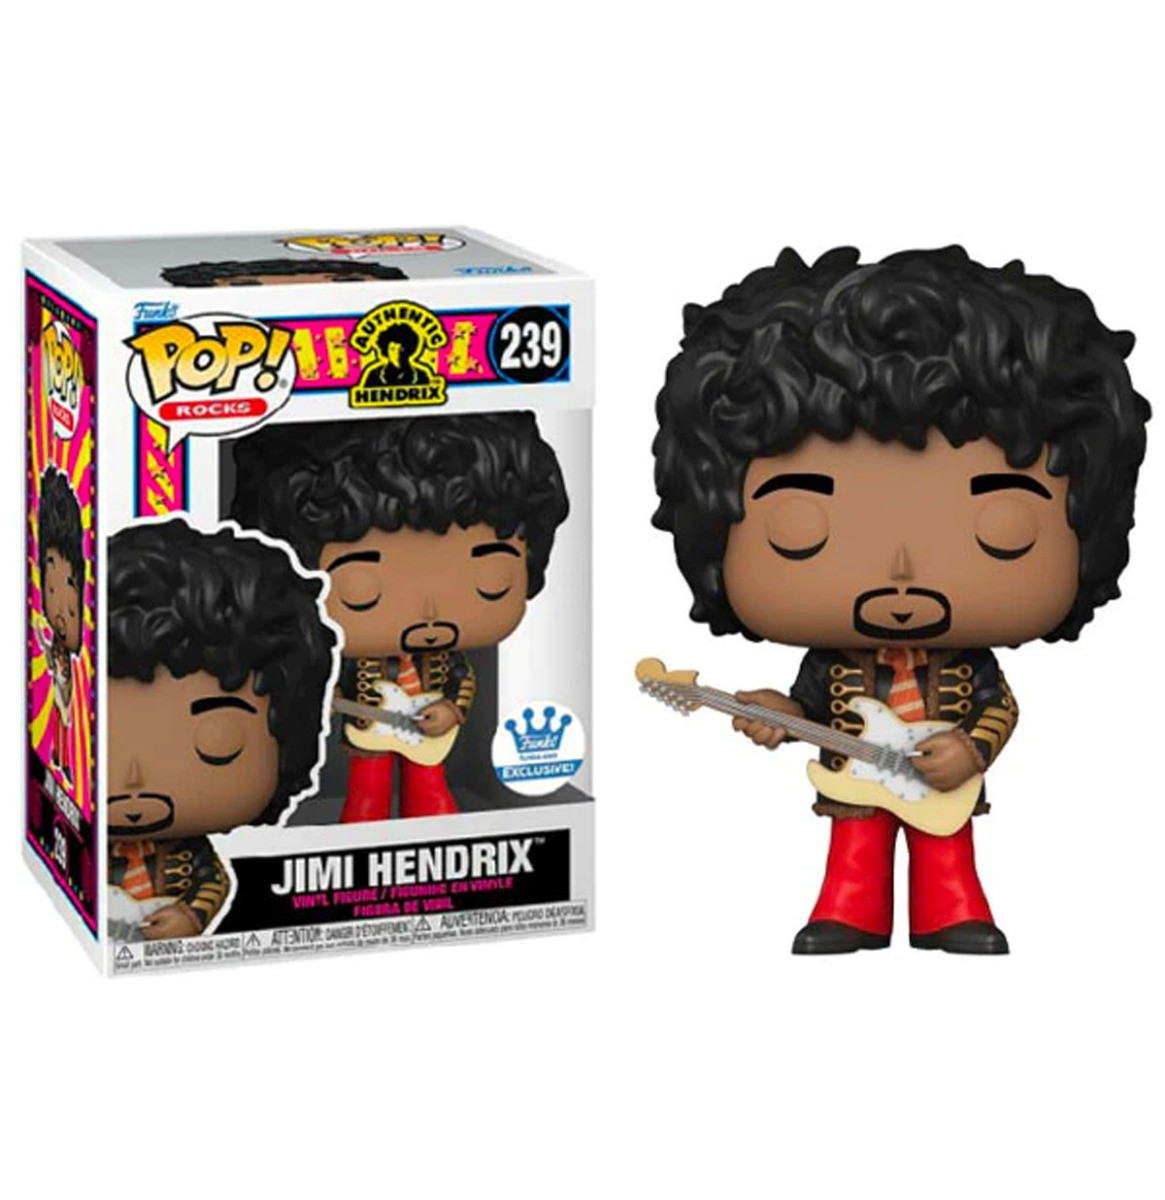 Funko Pop! Rocks: Jimi Hendrix In Napoleonic Hussar Jacket - Funko Store Exclusive